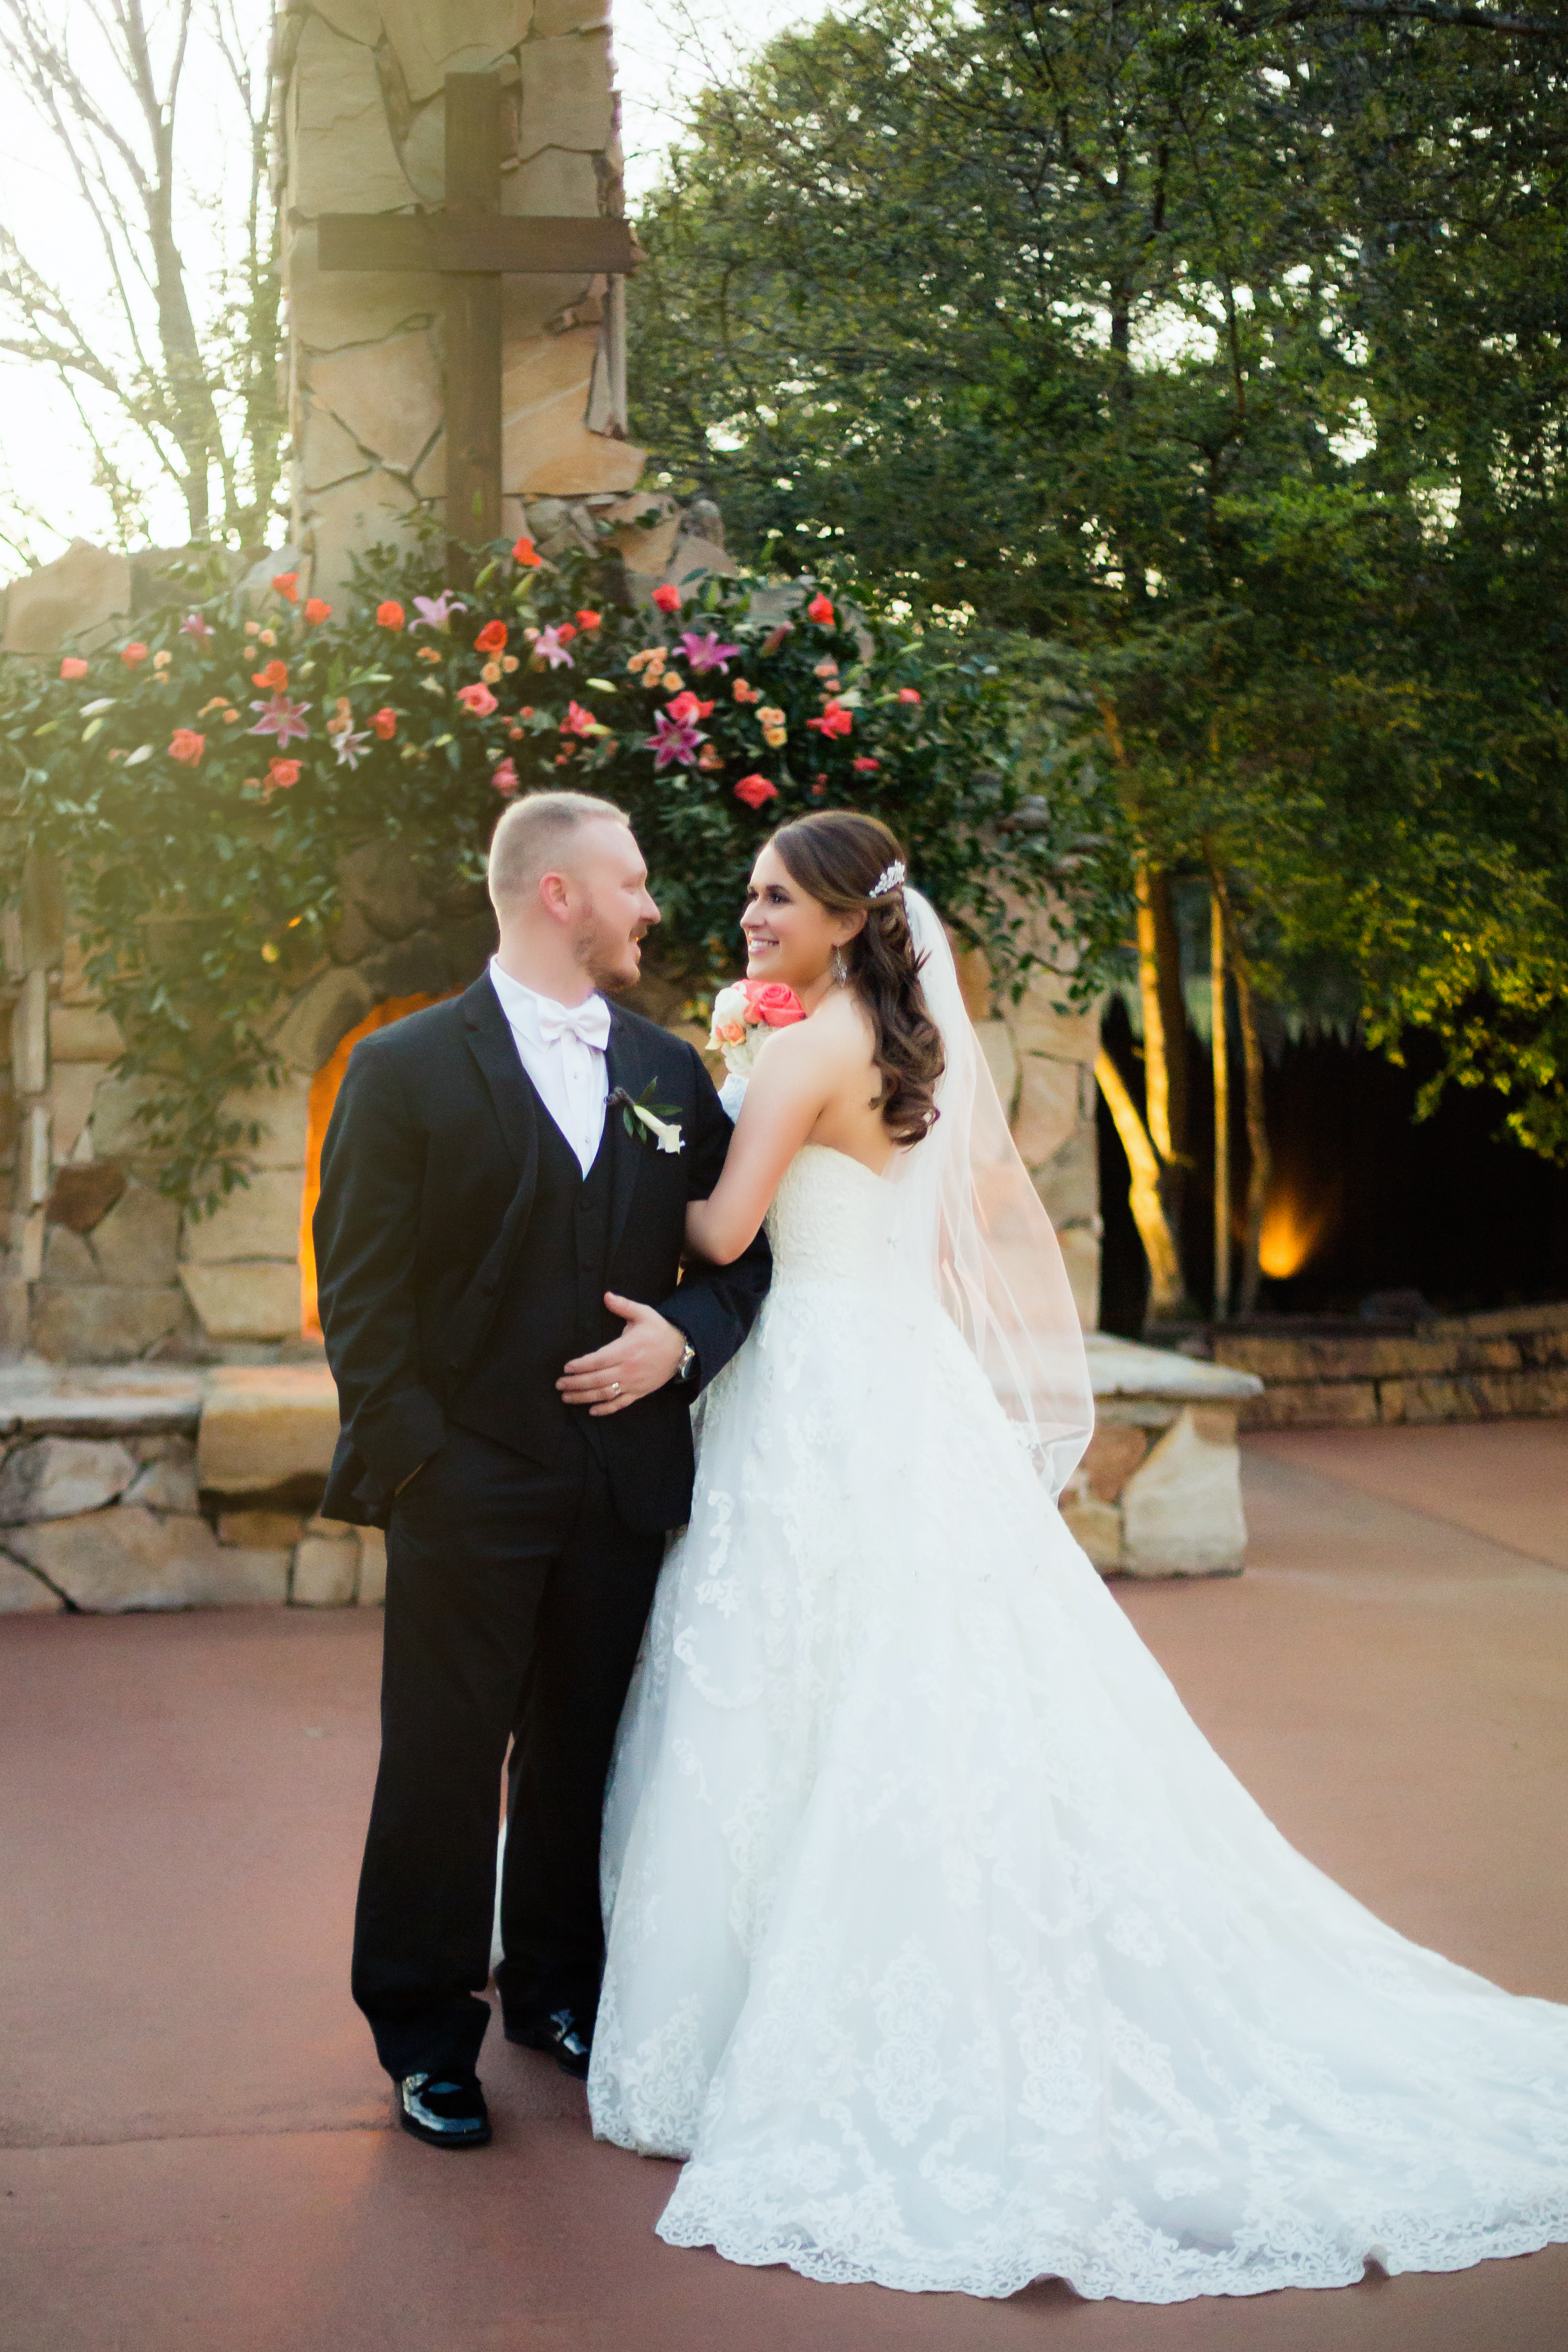 Top Houston Wedding Photos by Jessica Pledger Photography